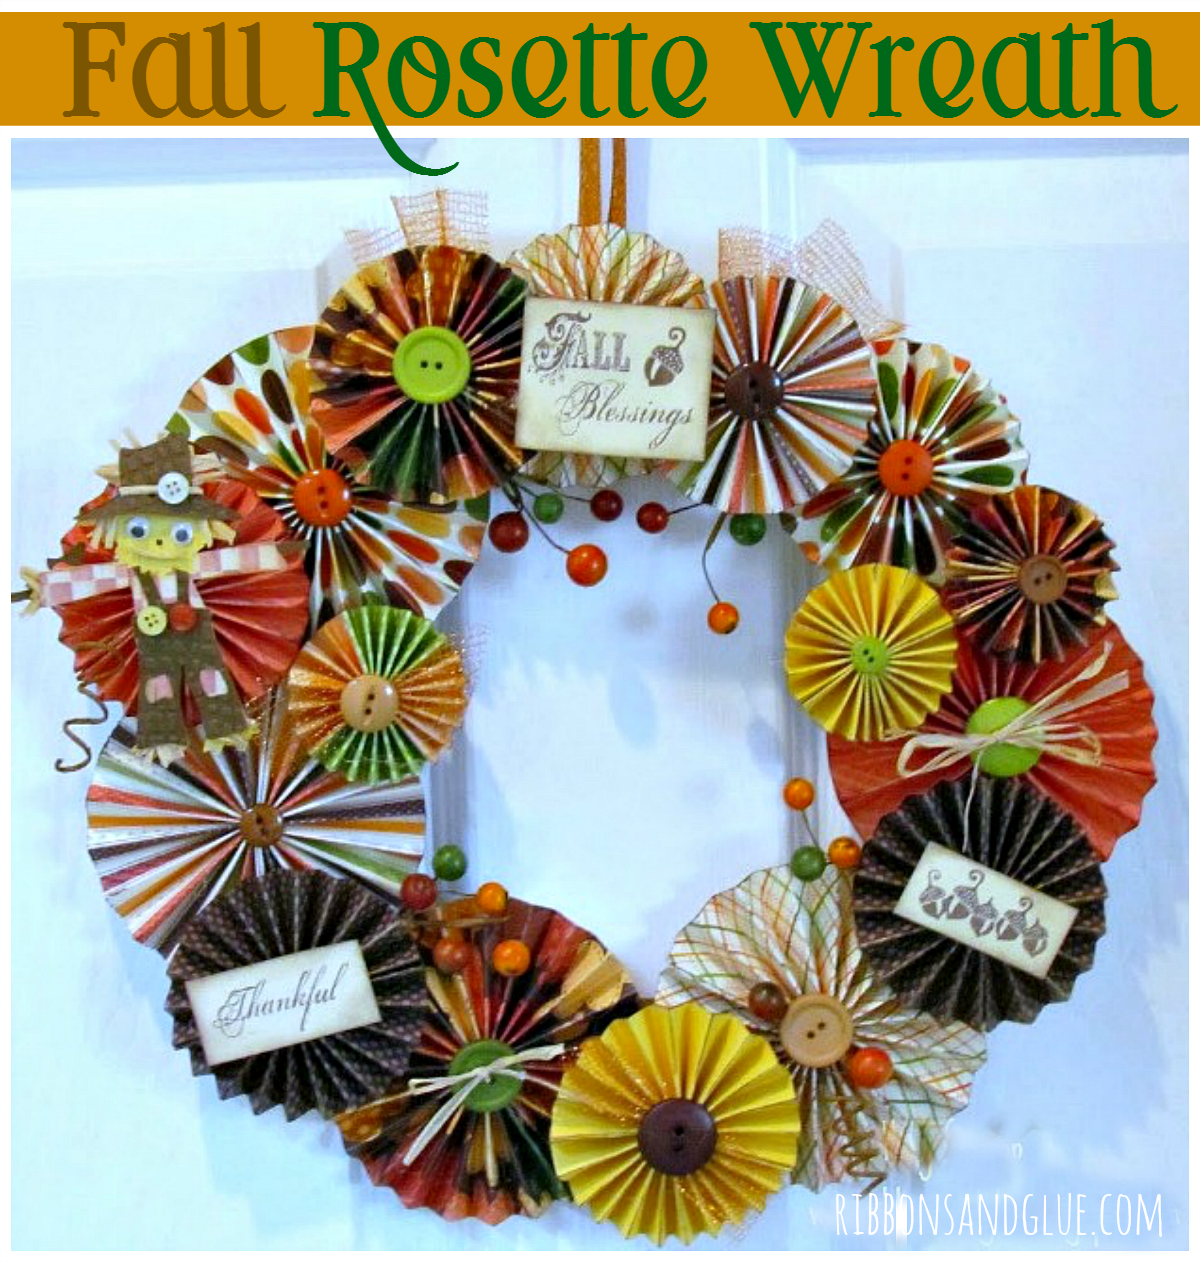 Fall Rosette Wreath